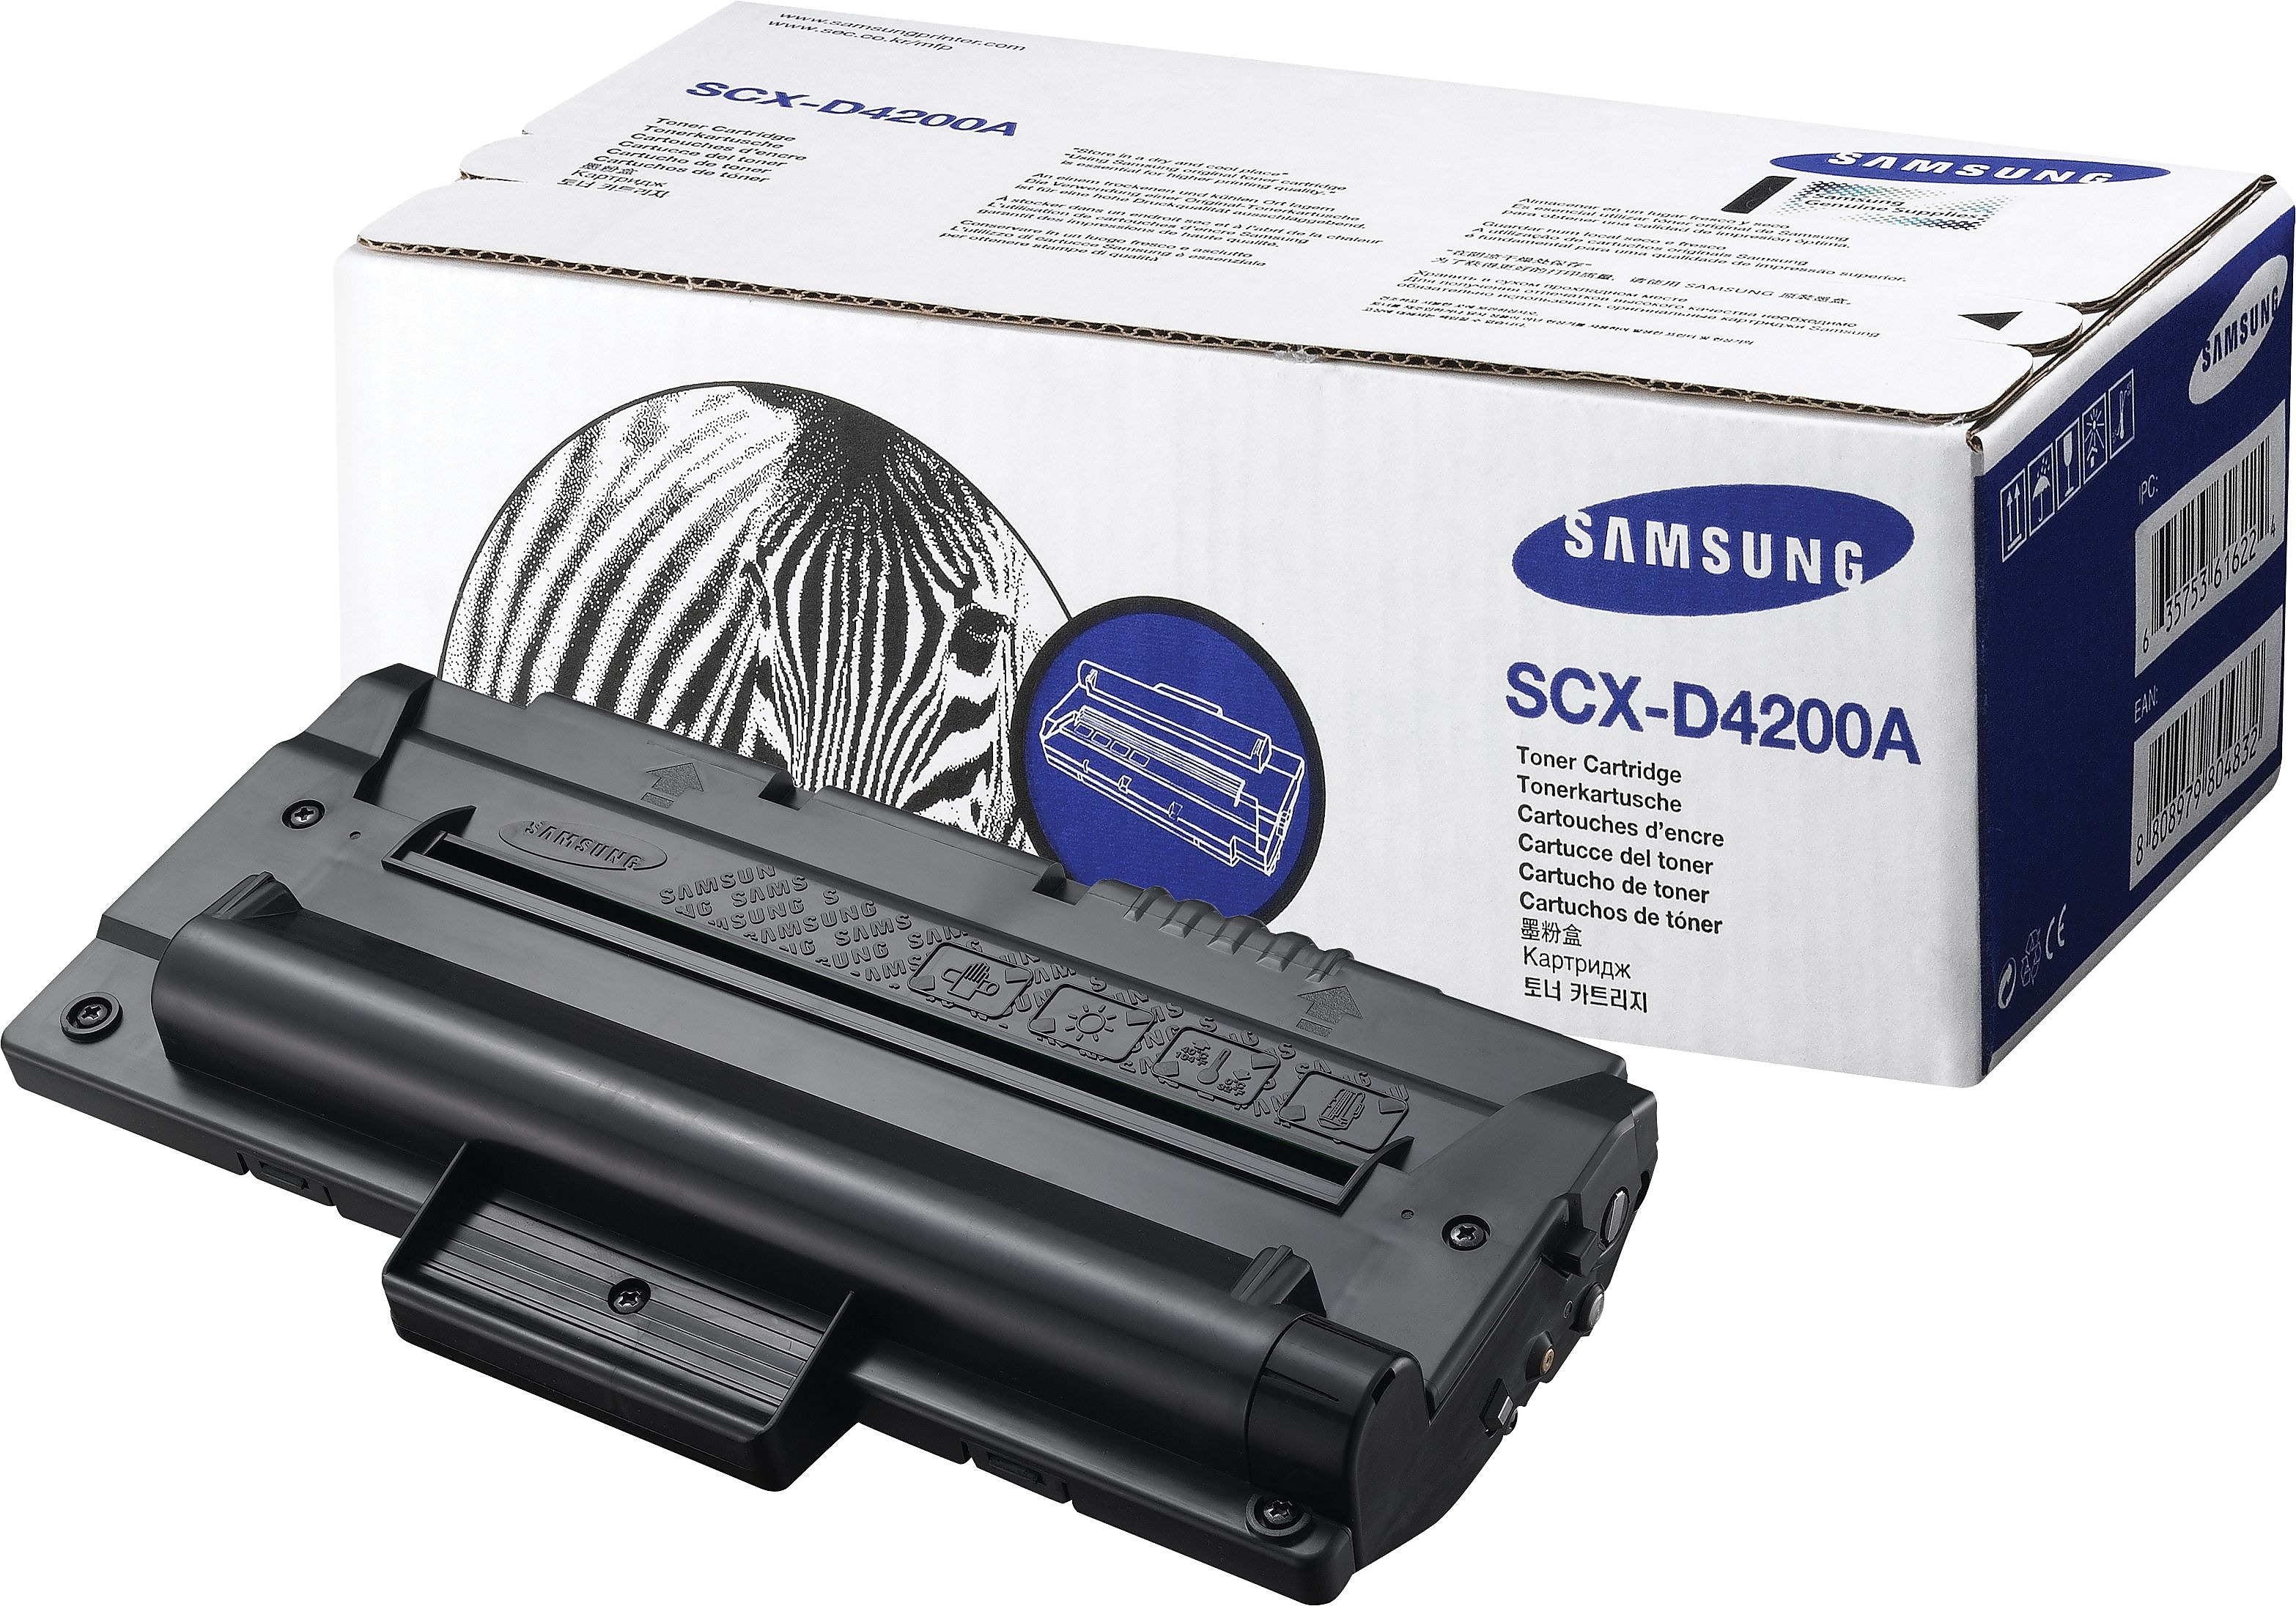 SAMSUNG SCX4200 Toner Cartridge (3,000 yield) - image 2 of 2